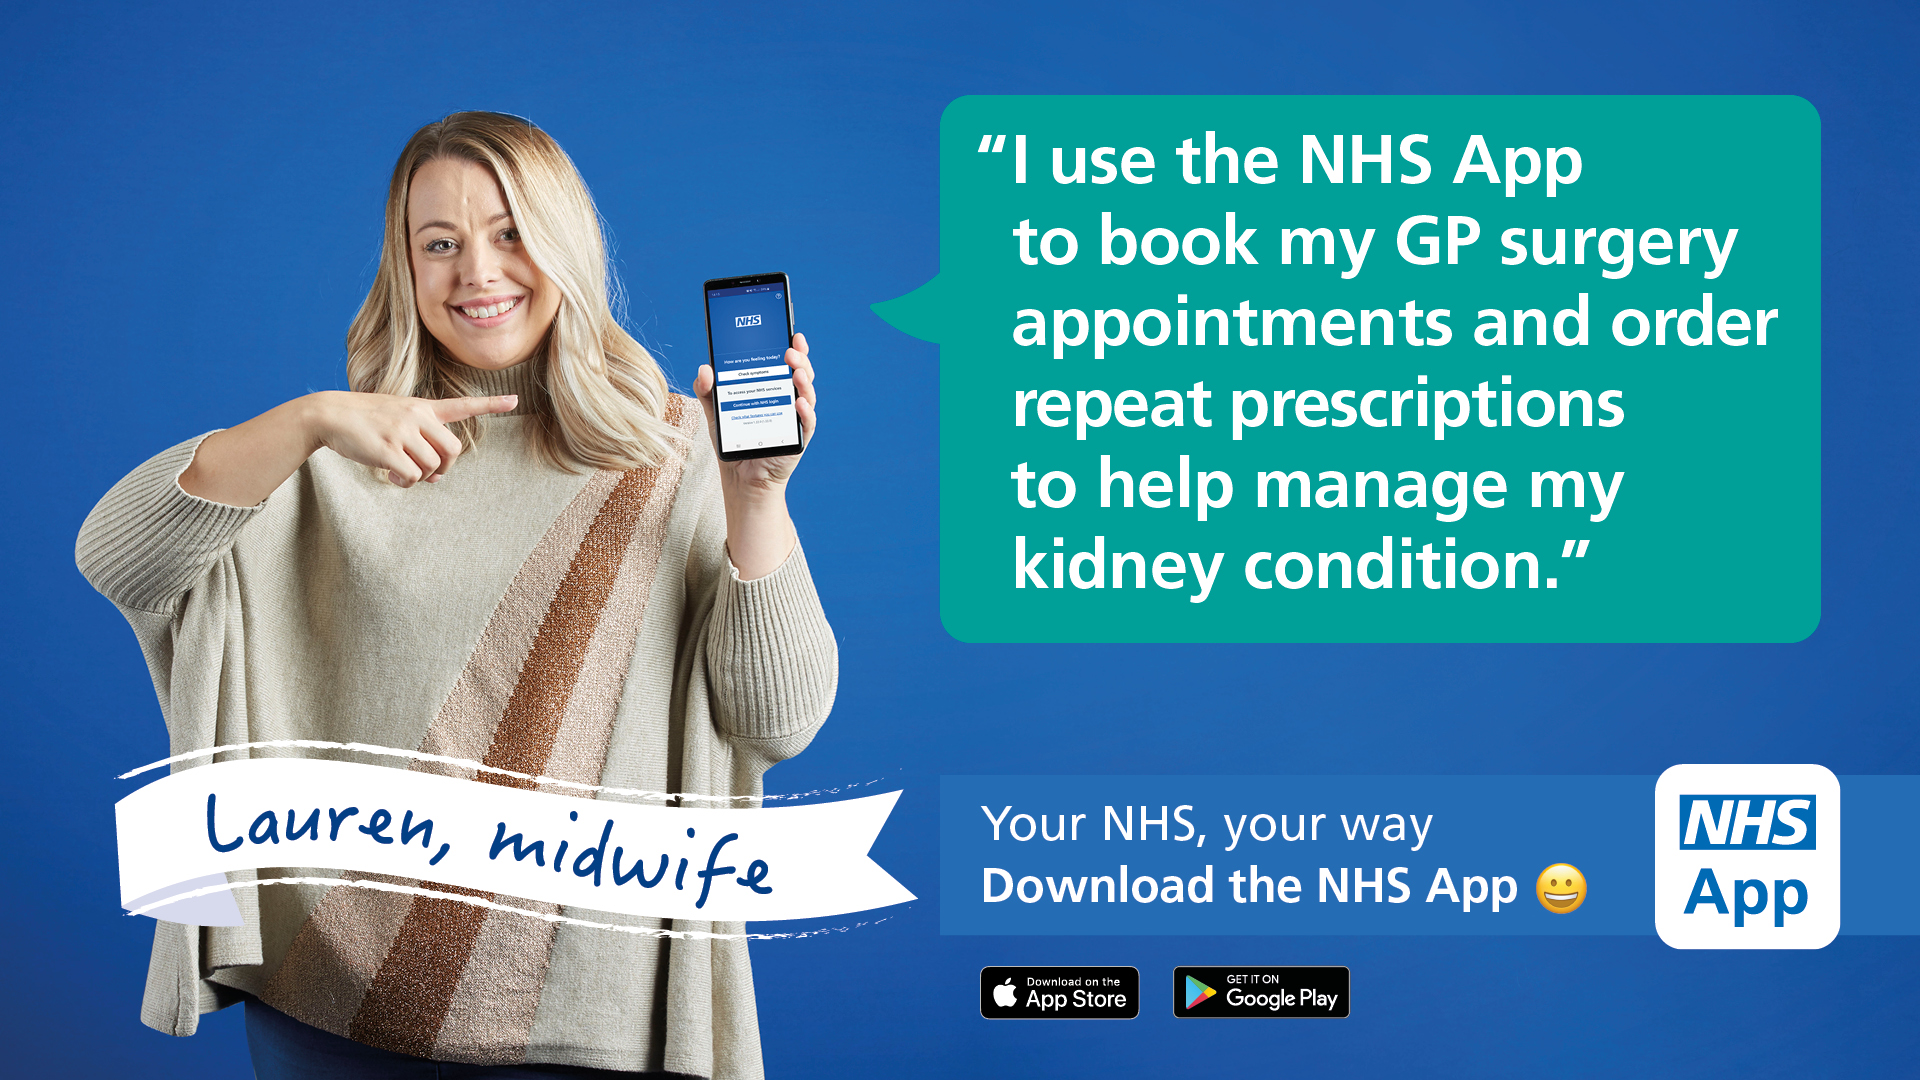 NHS App Midwife